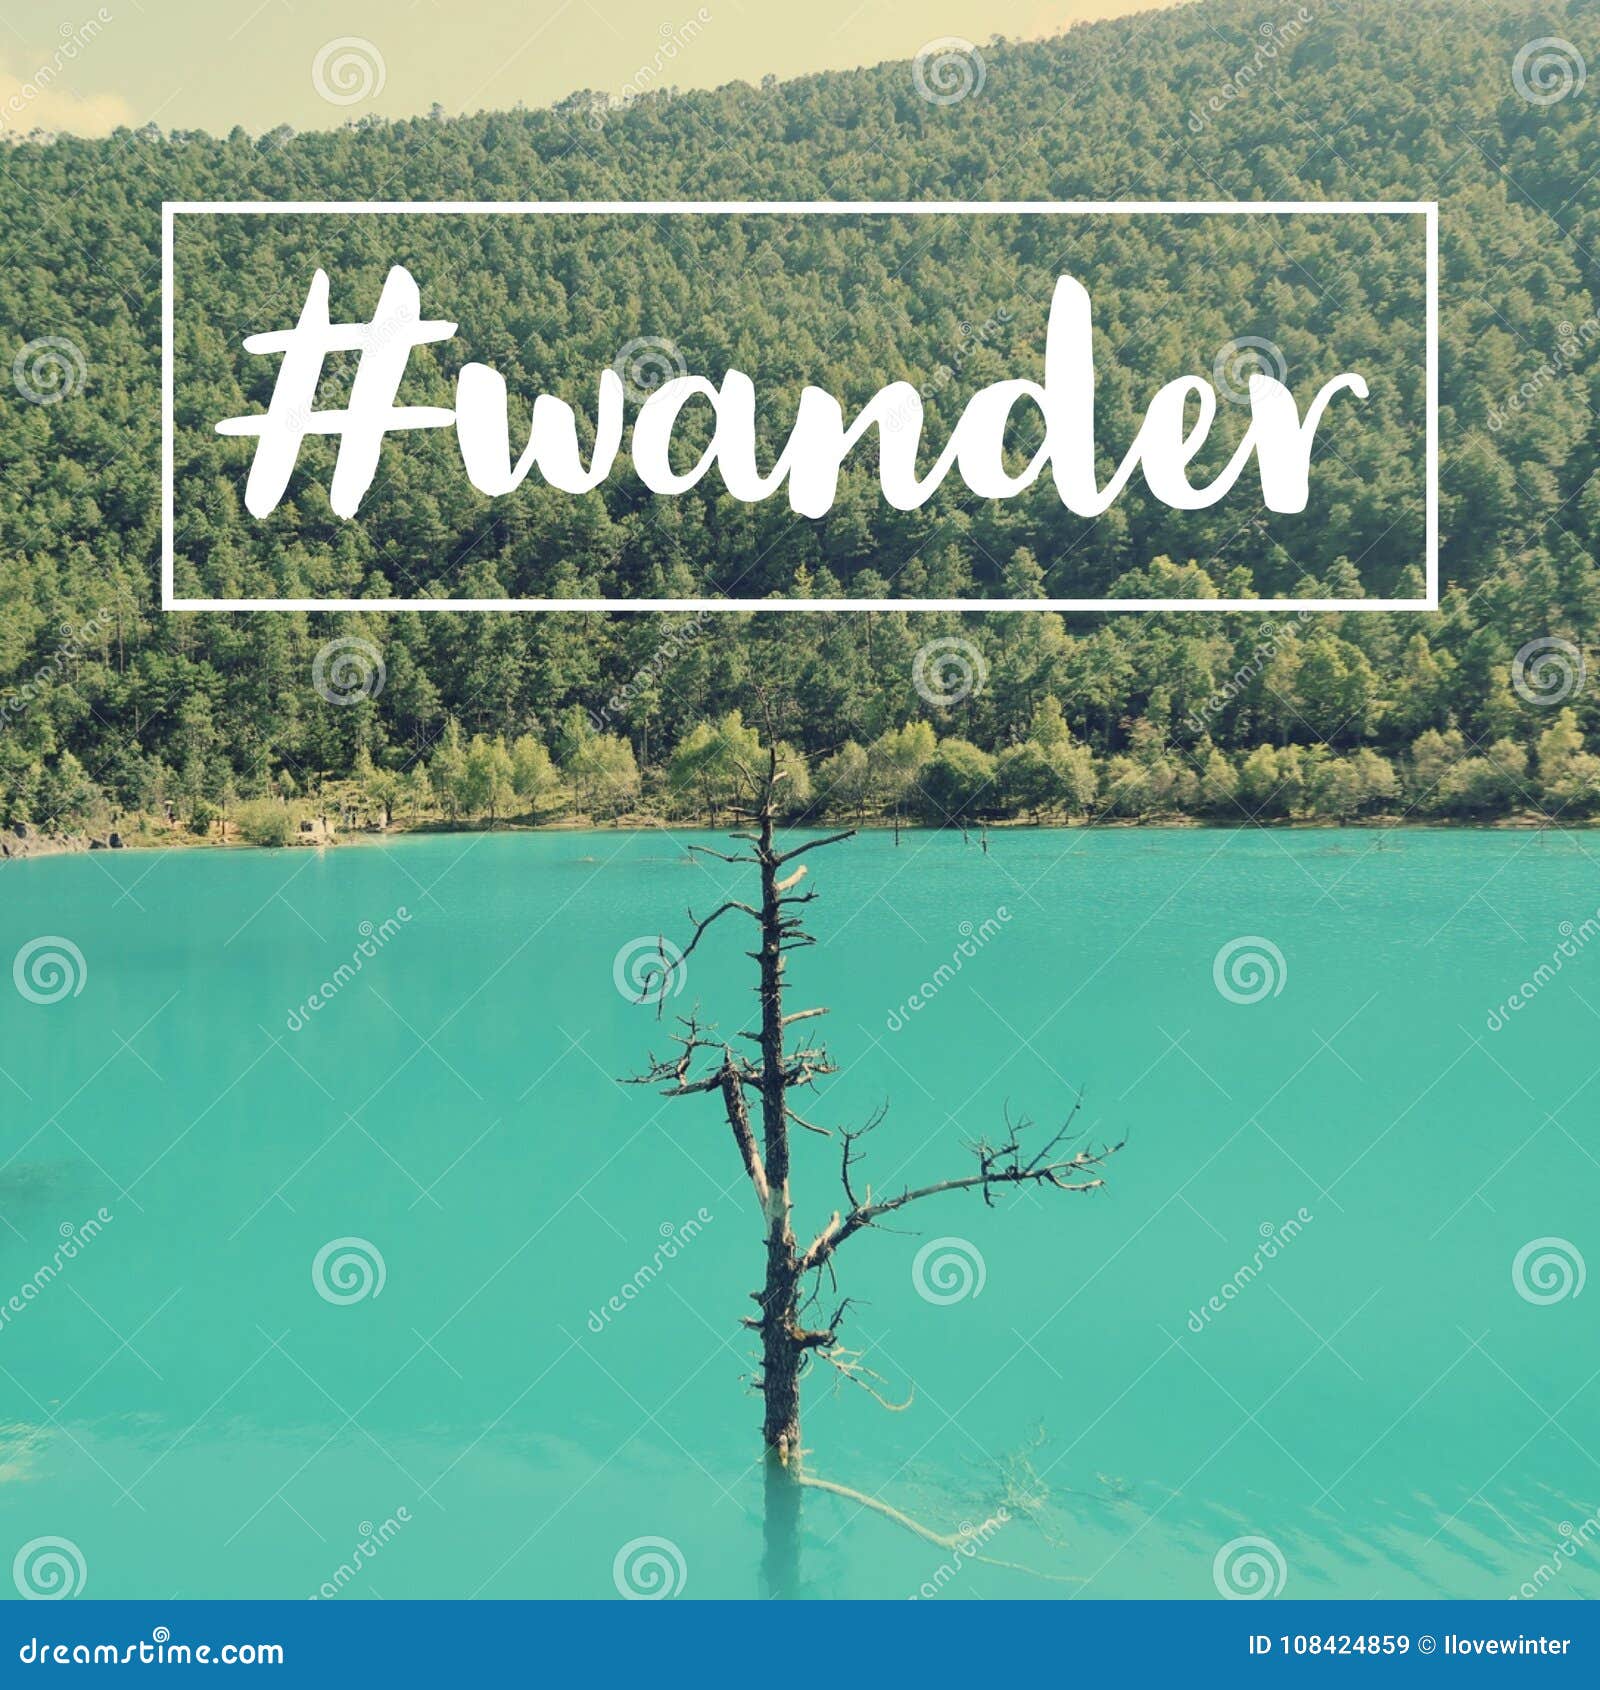 inspirational motivational travel quote `wander`